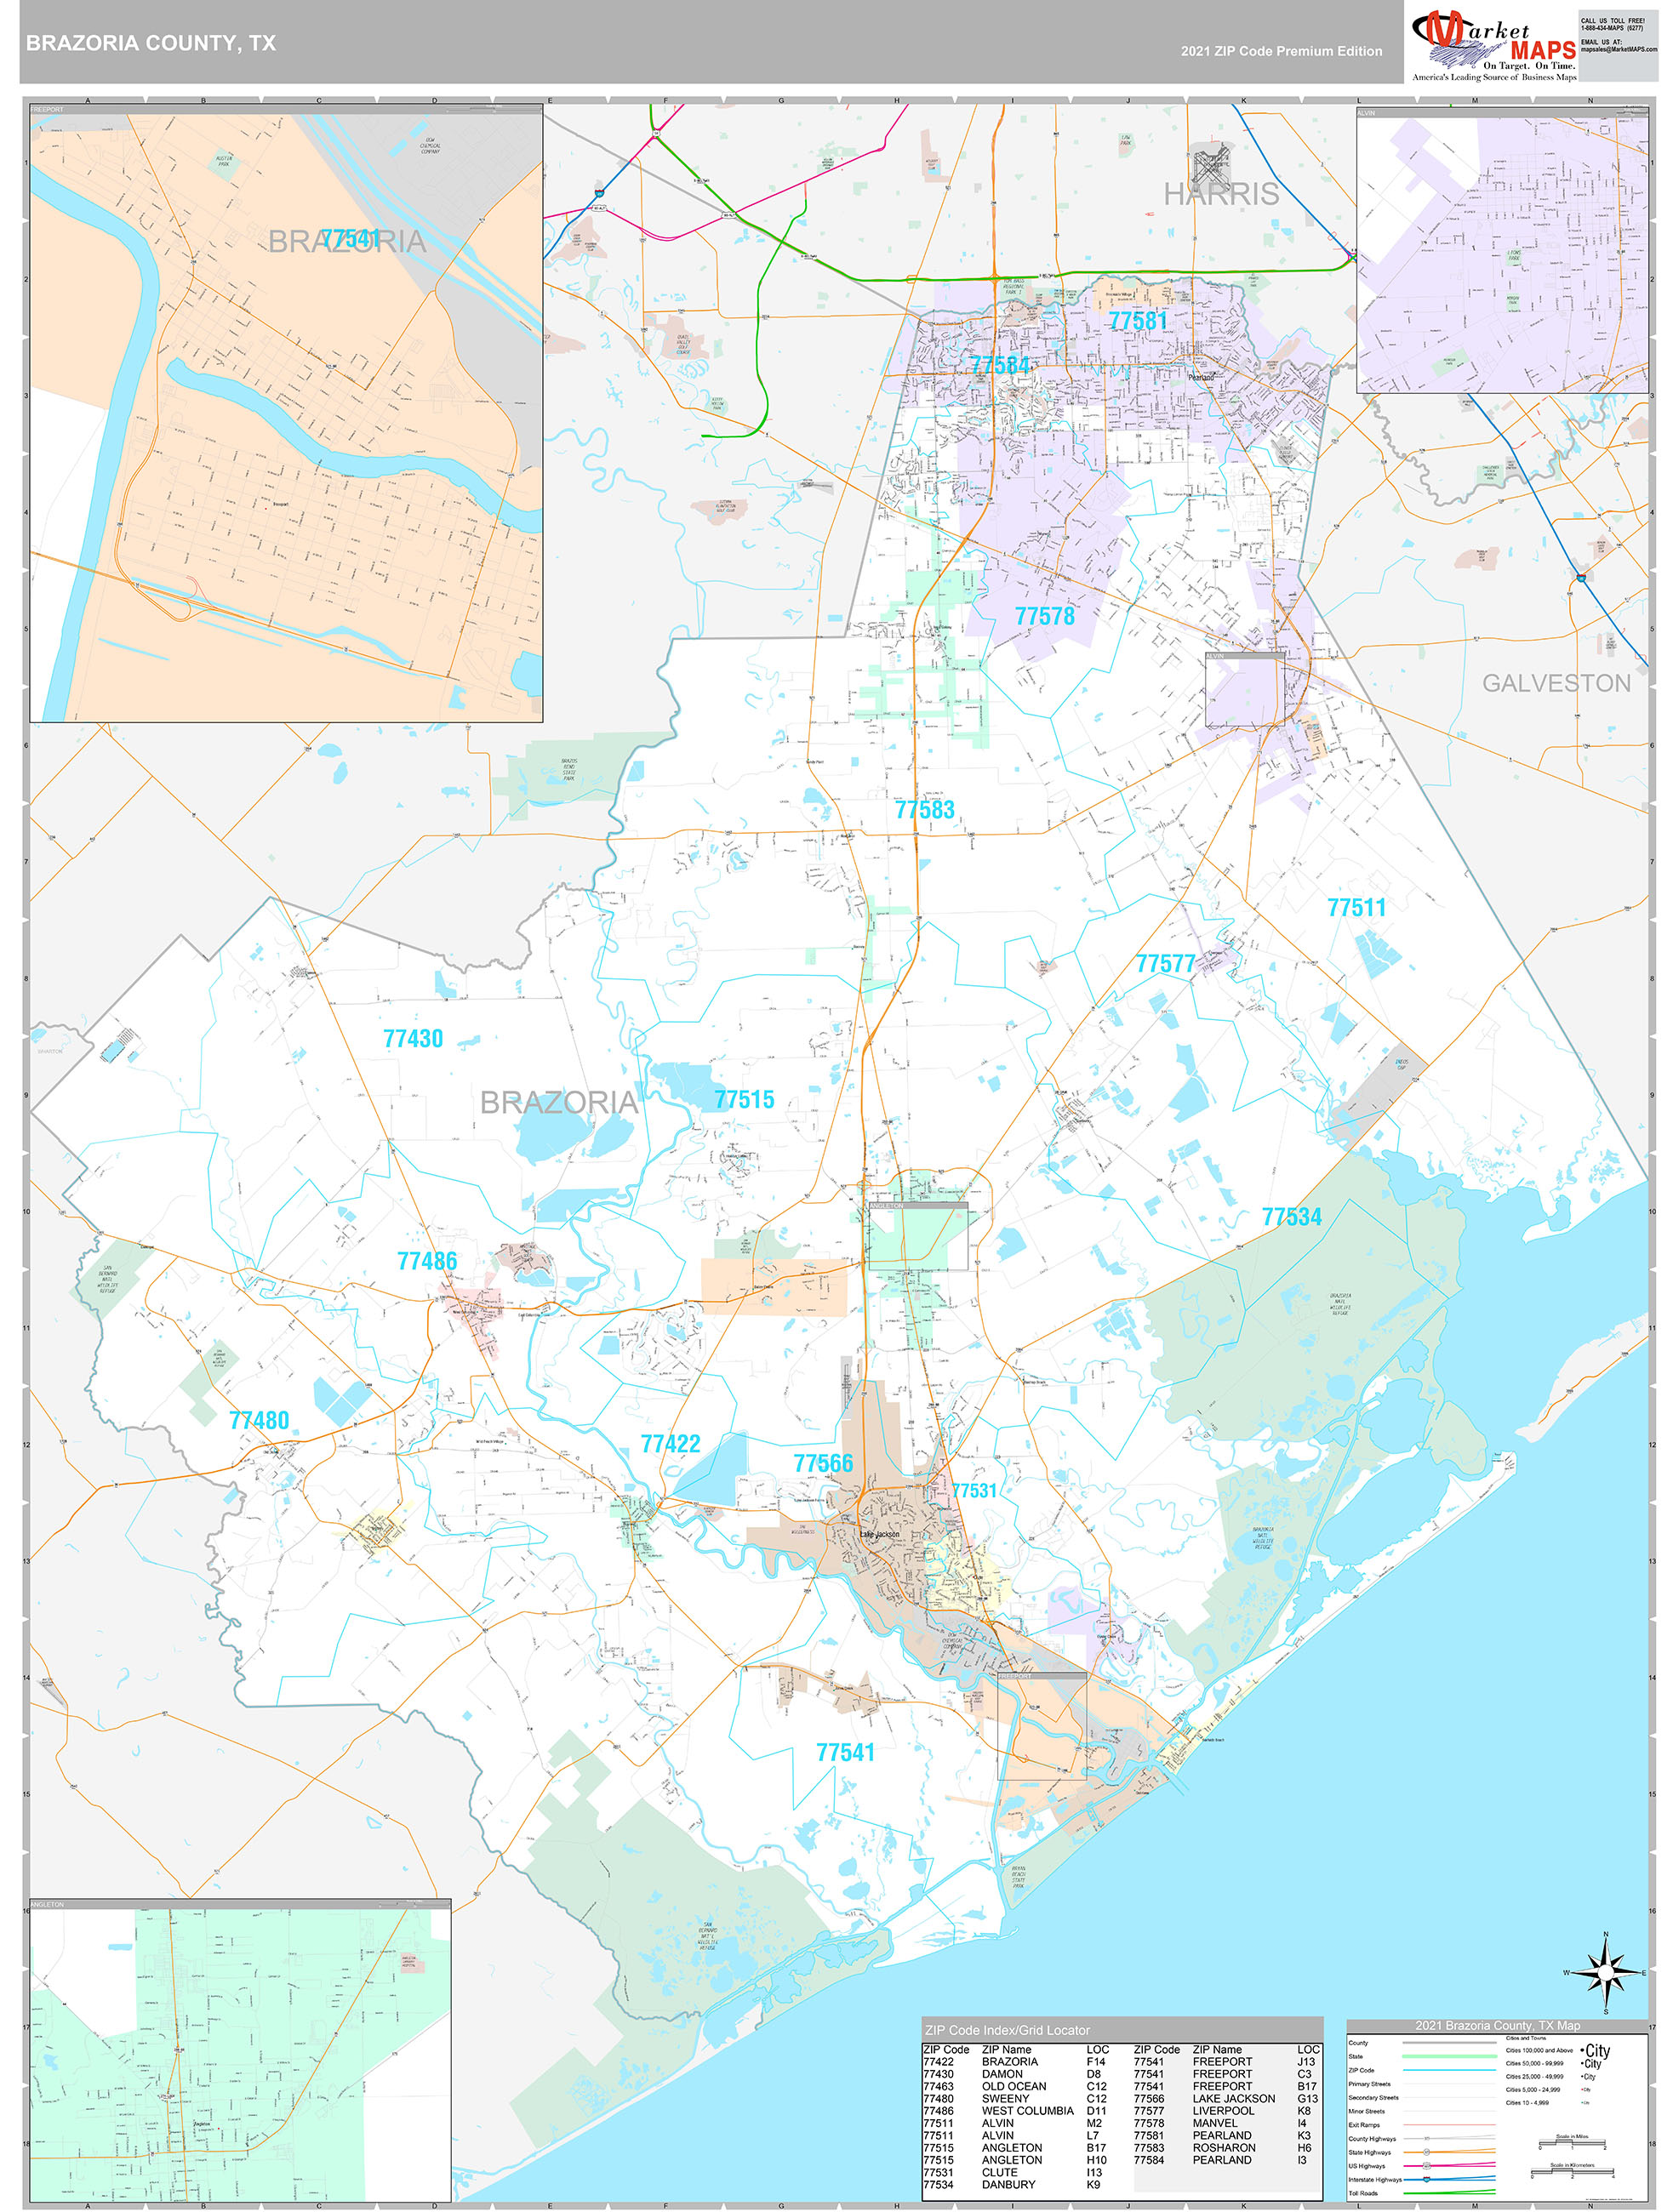 brazoria-county-tx-wall-map-premium-style-by-marketmaps-mapsales